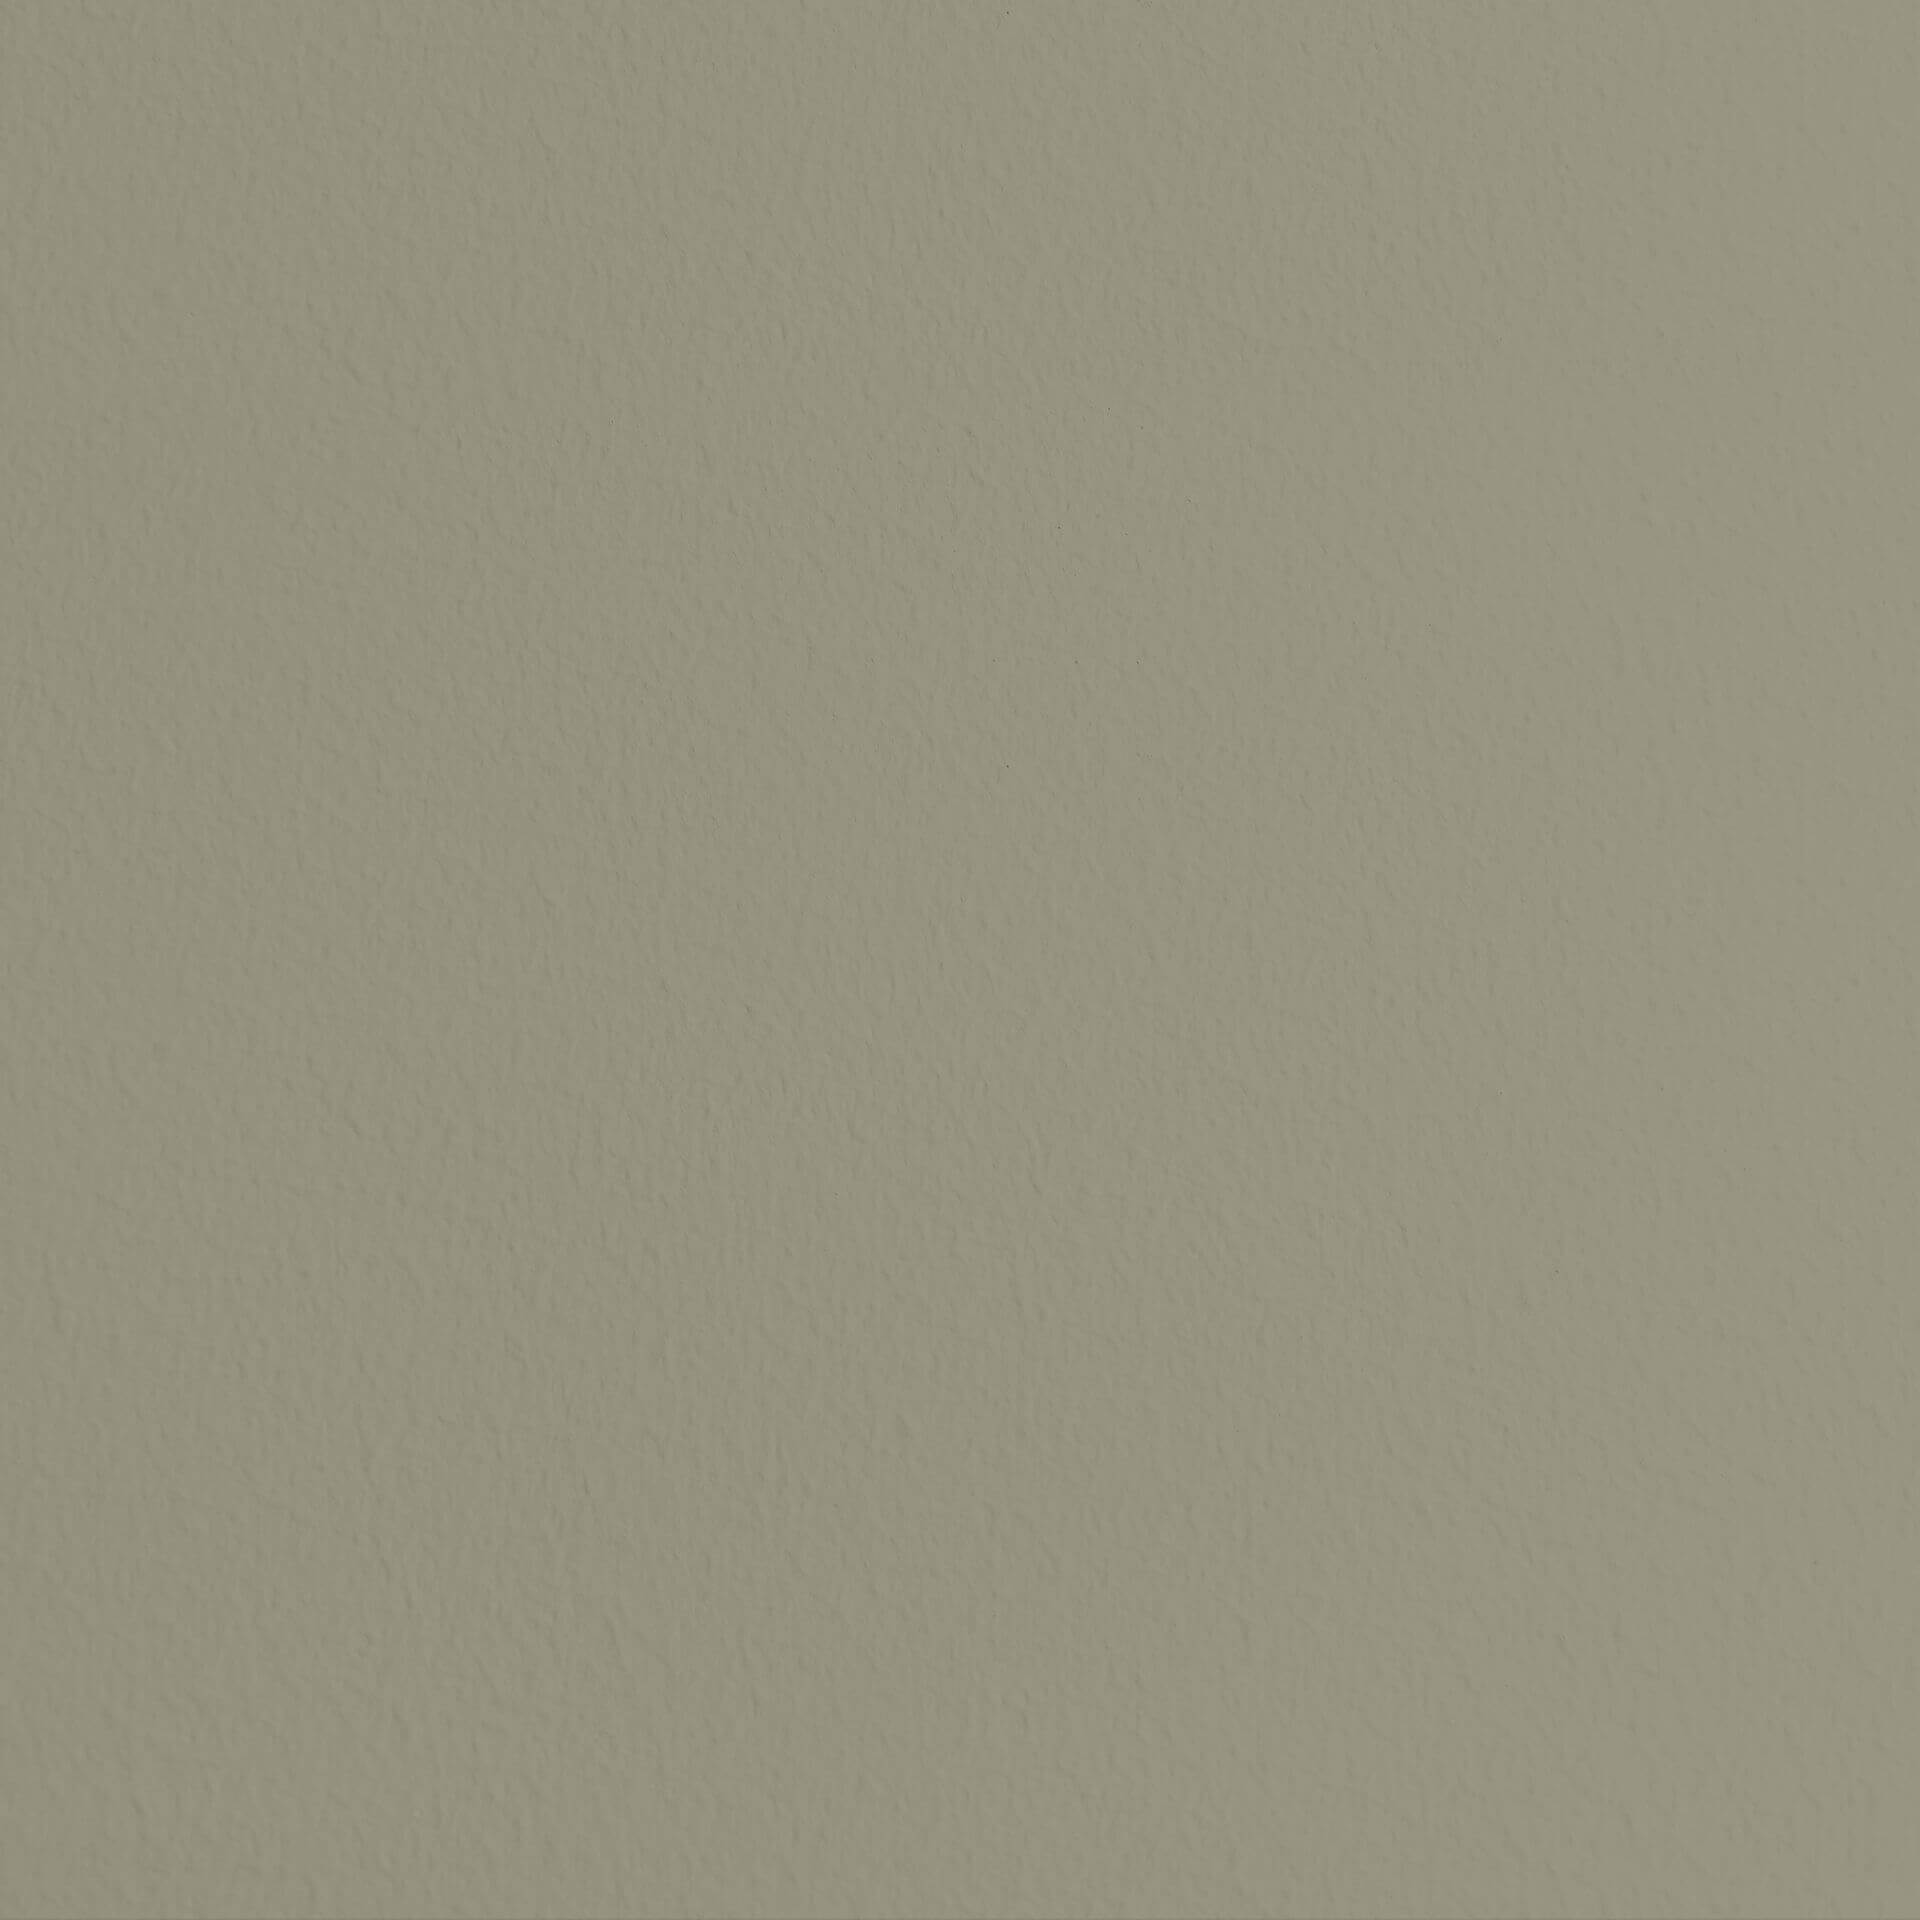 Mylands Empire Grey No. 171 - Marble Matt Emulsion / Wandfarbe, 1L